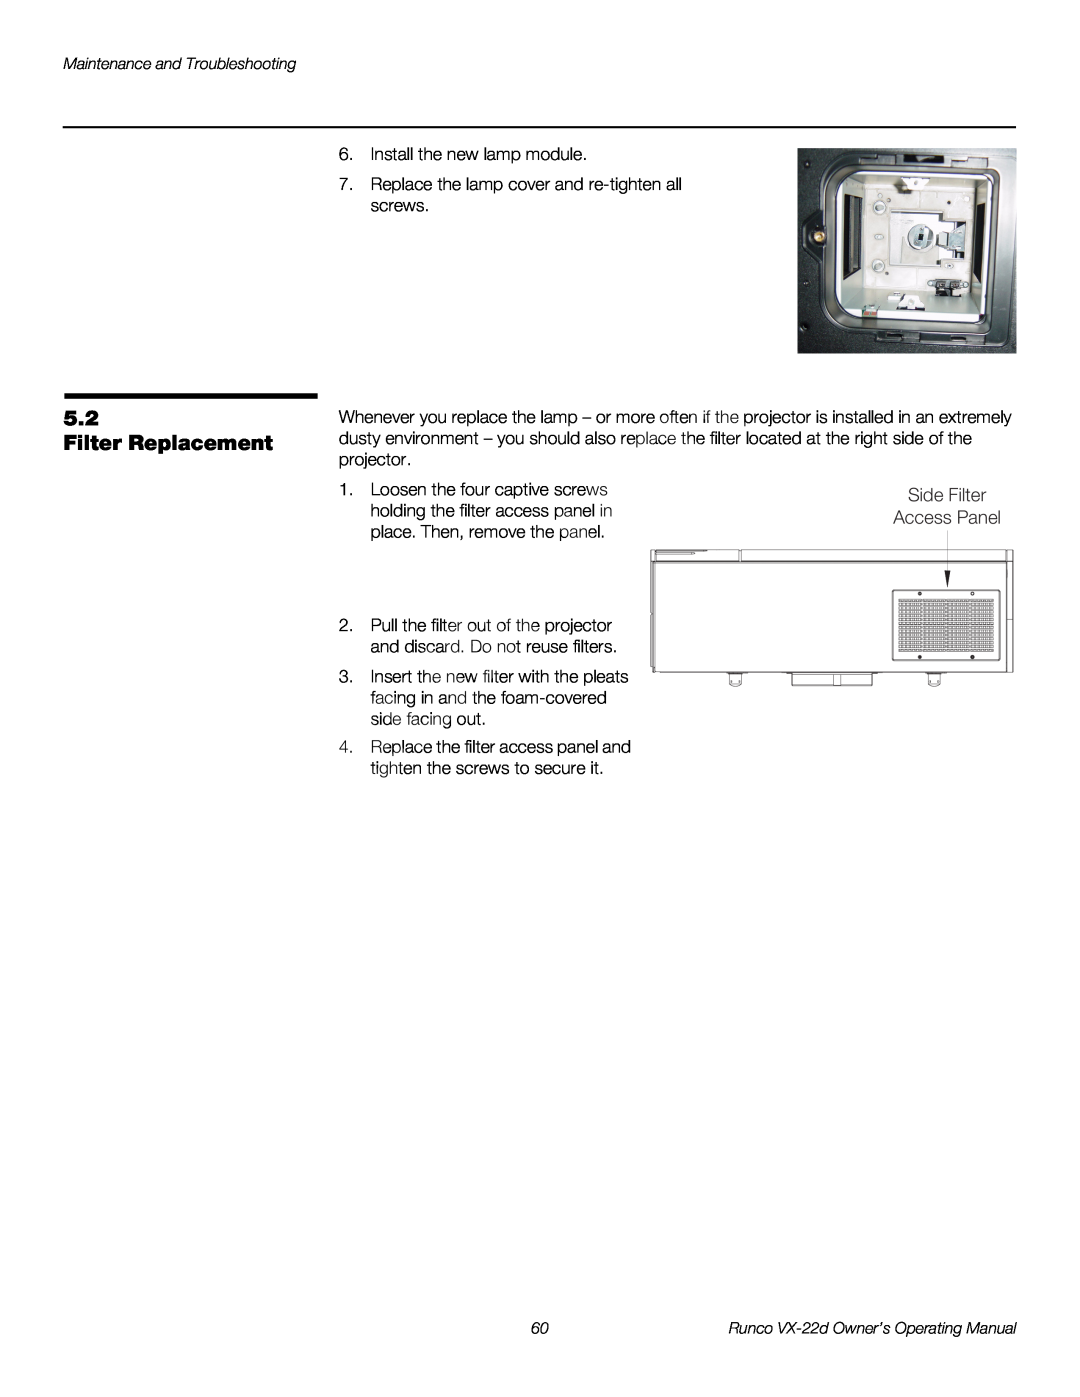 Runco VX-22D manual Filter Replacement, Side Filter Access Panel 